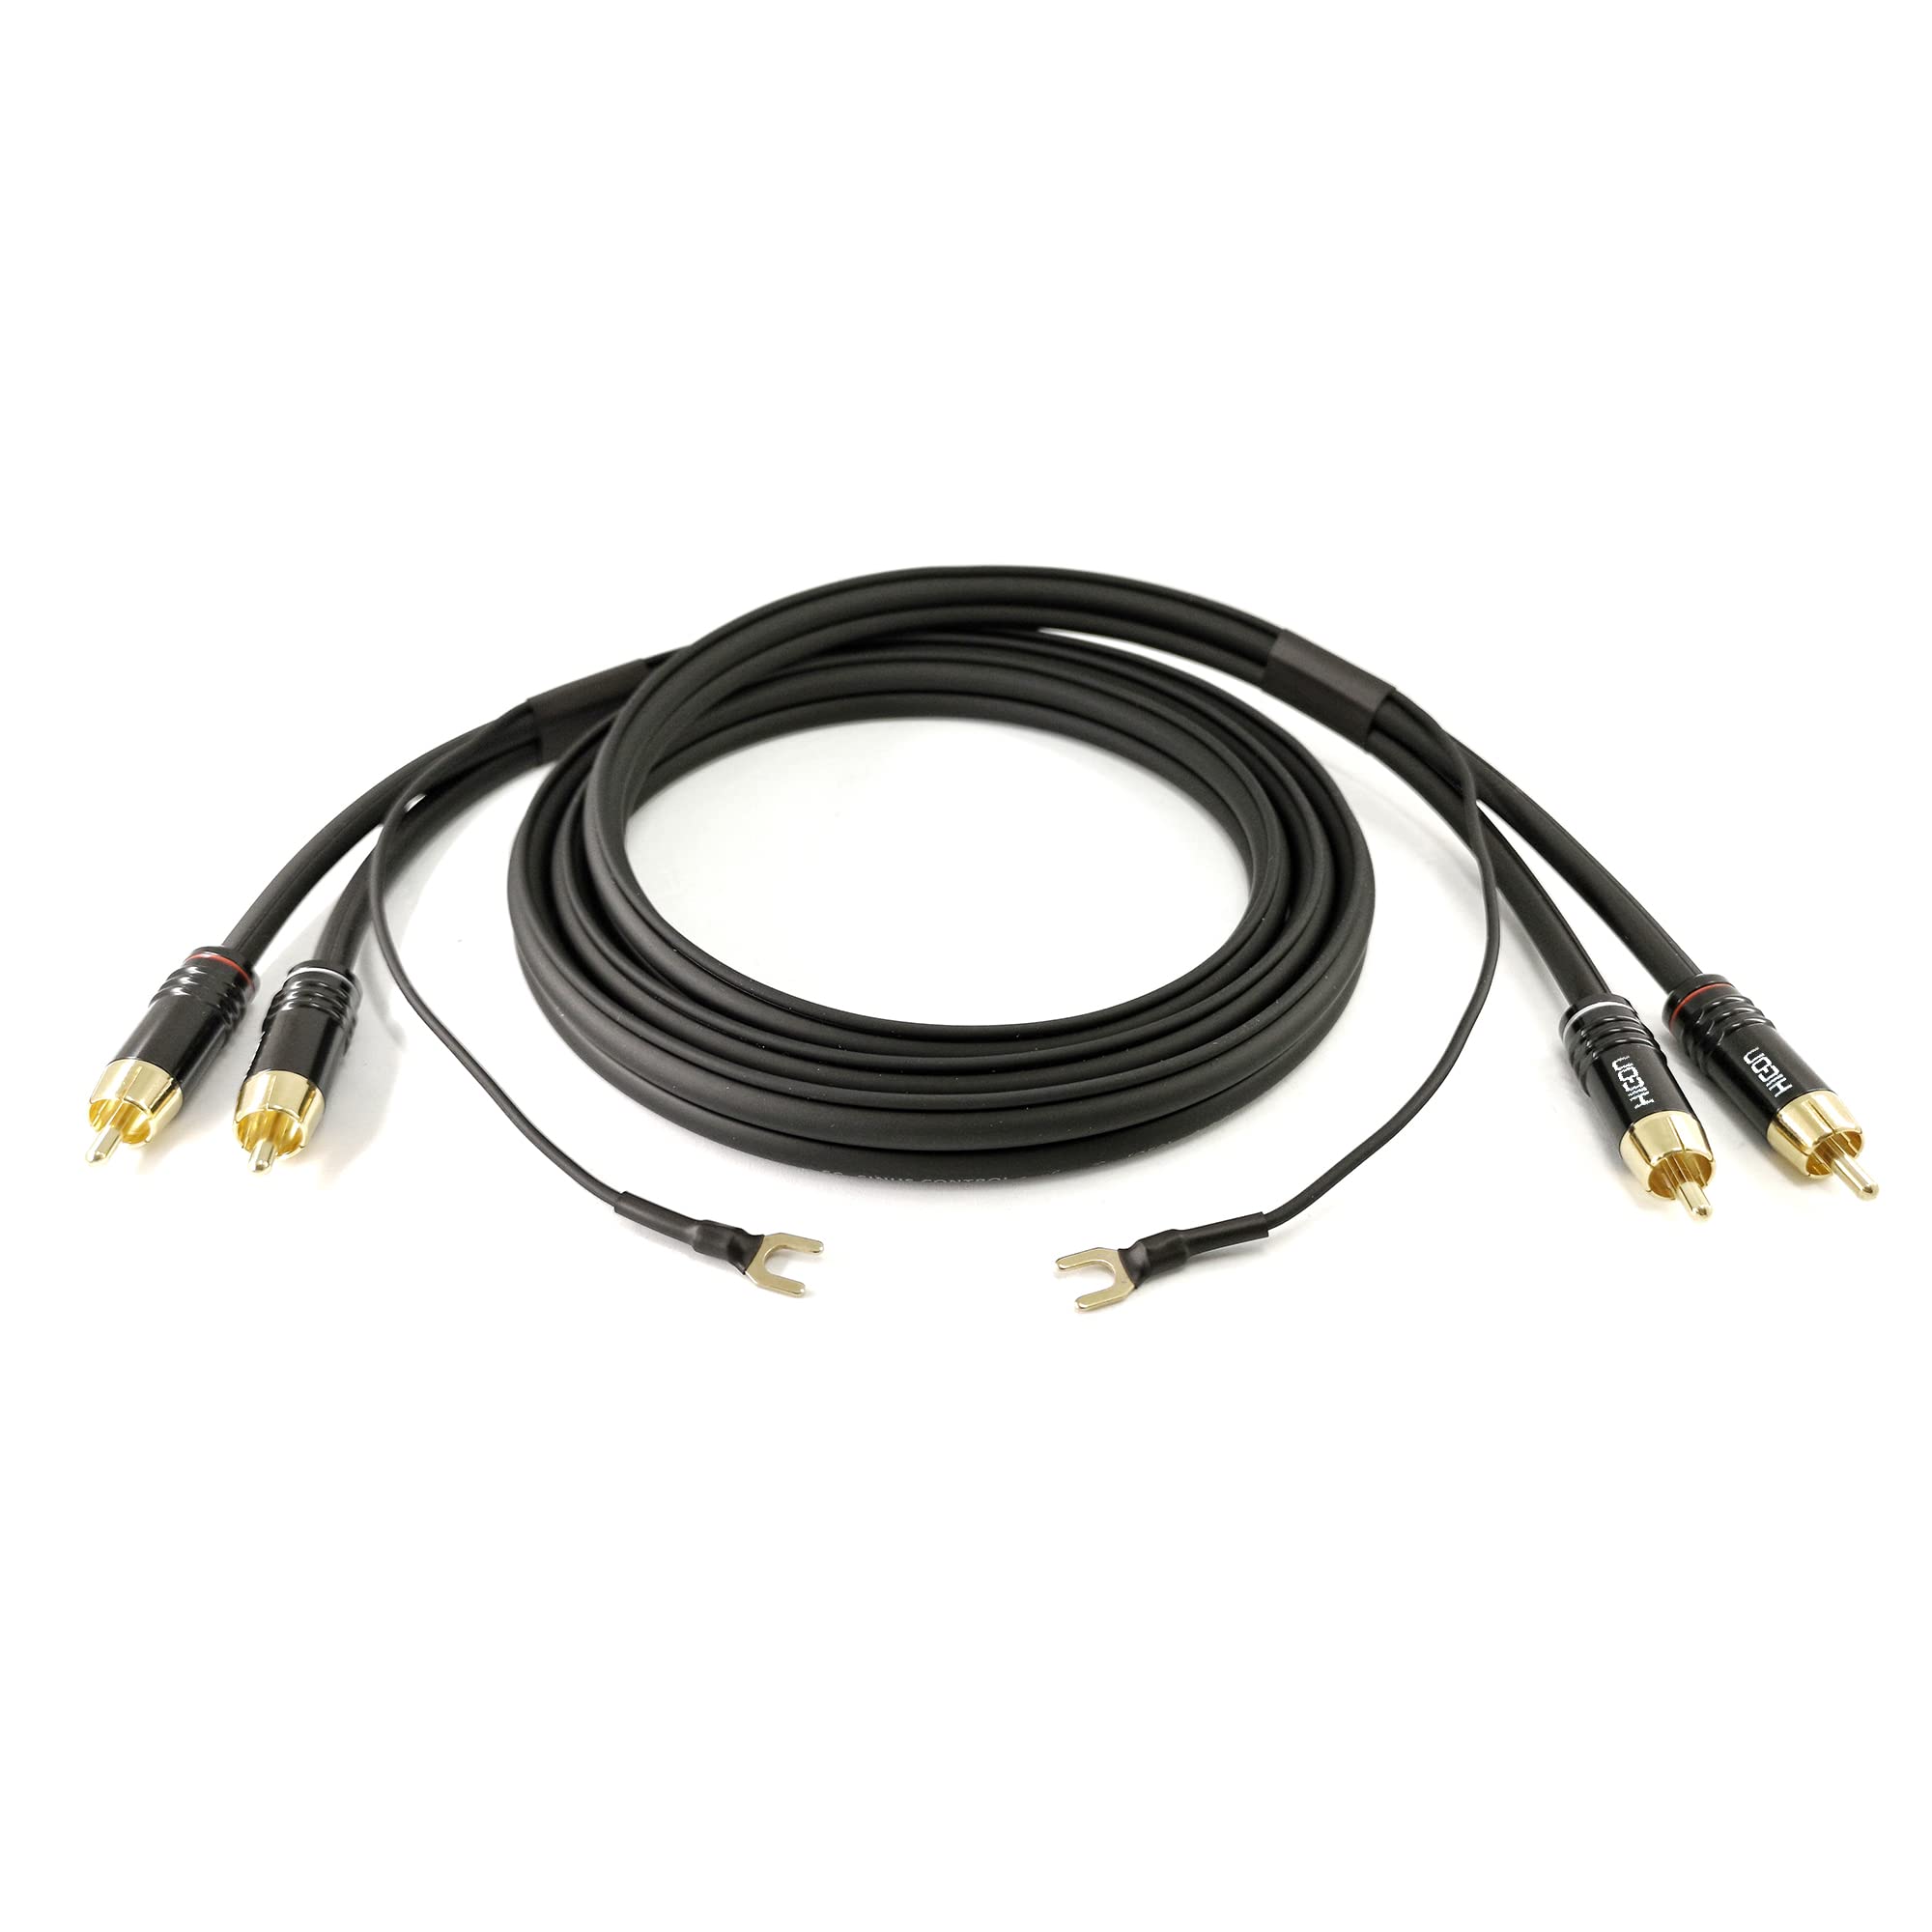 Selected Cable 2,5m Plattenspielerkabel Phonoline mit 2x 5cm verlängerter Erdungsleitung Audio 2x 0,35mm² für Plattenspieler vergoldeten Stecker - SC81-K3-BLK-0250